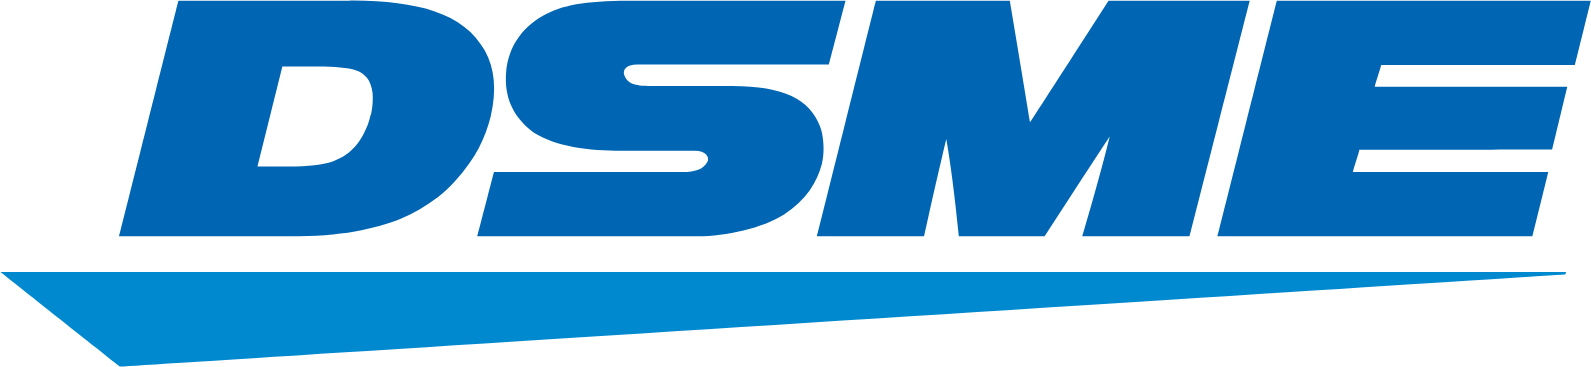 DSME (Daewoo Shipbuilding) logo (PNG transparent)